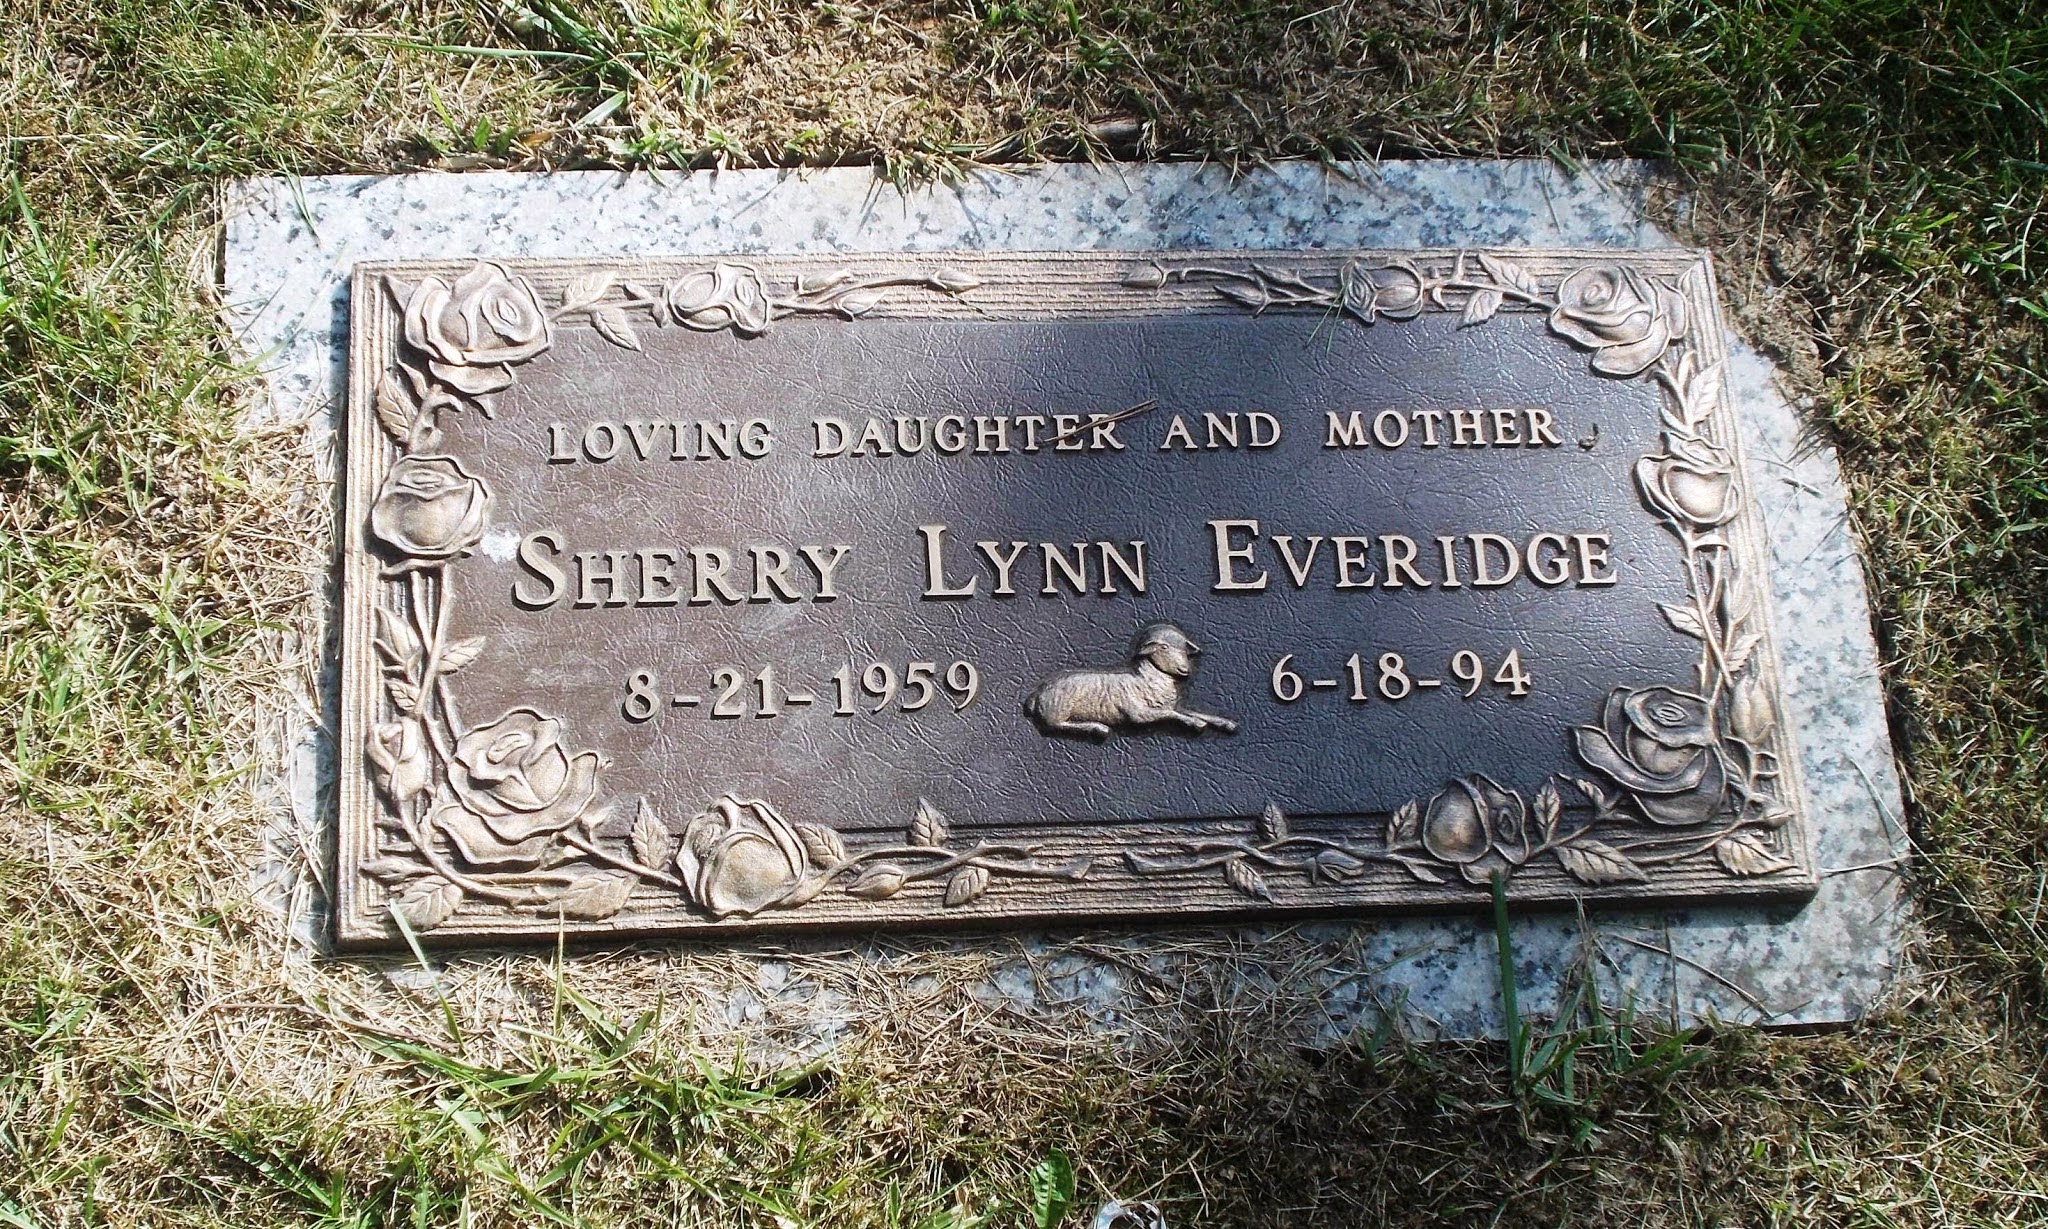 Sherry Lynn Everidge